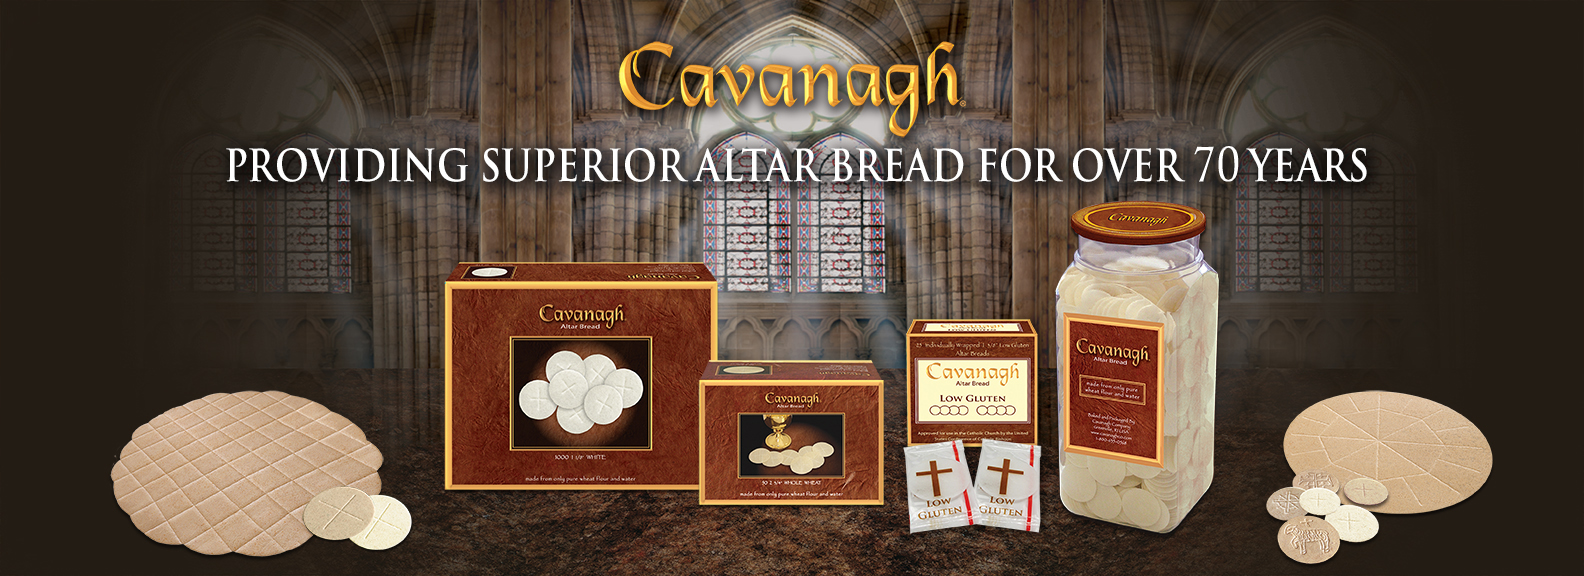 Cavanagh: Providing superior altar bread for over 70 years